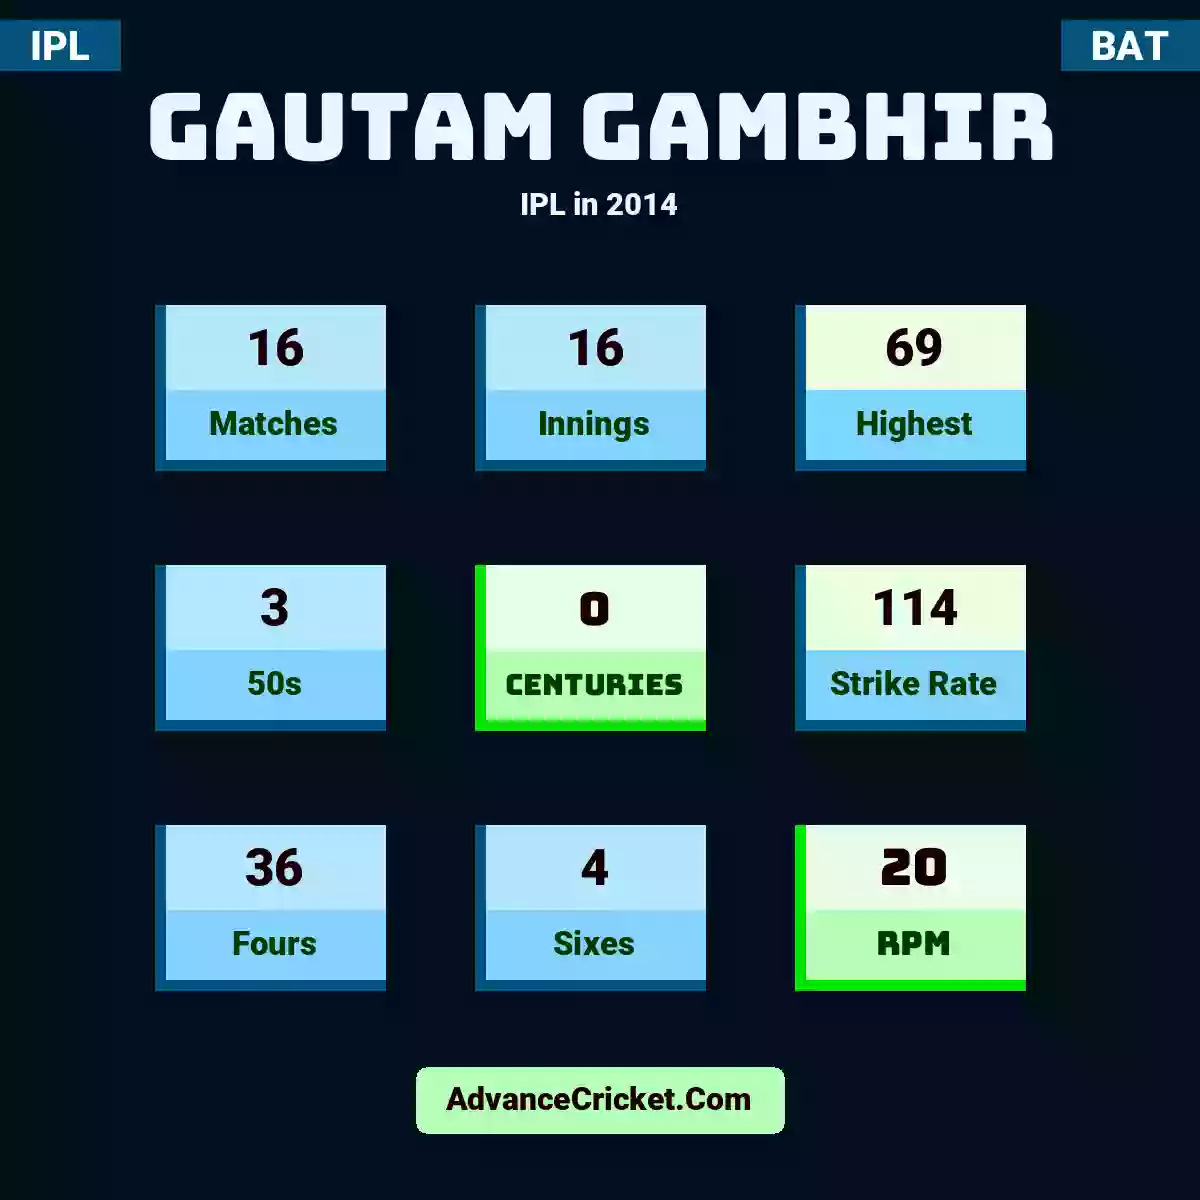 Gautam Gambhir IPL  in 2014, Gautam Gambhir played 16 matches, scored 69 runs as highest, 3 half-centuries, and 0 centuries, with a strike rate of 114. G.Gambhir hit 36 fours and 4 sixes, with an RPM of 20.